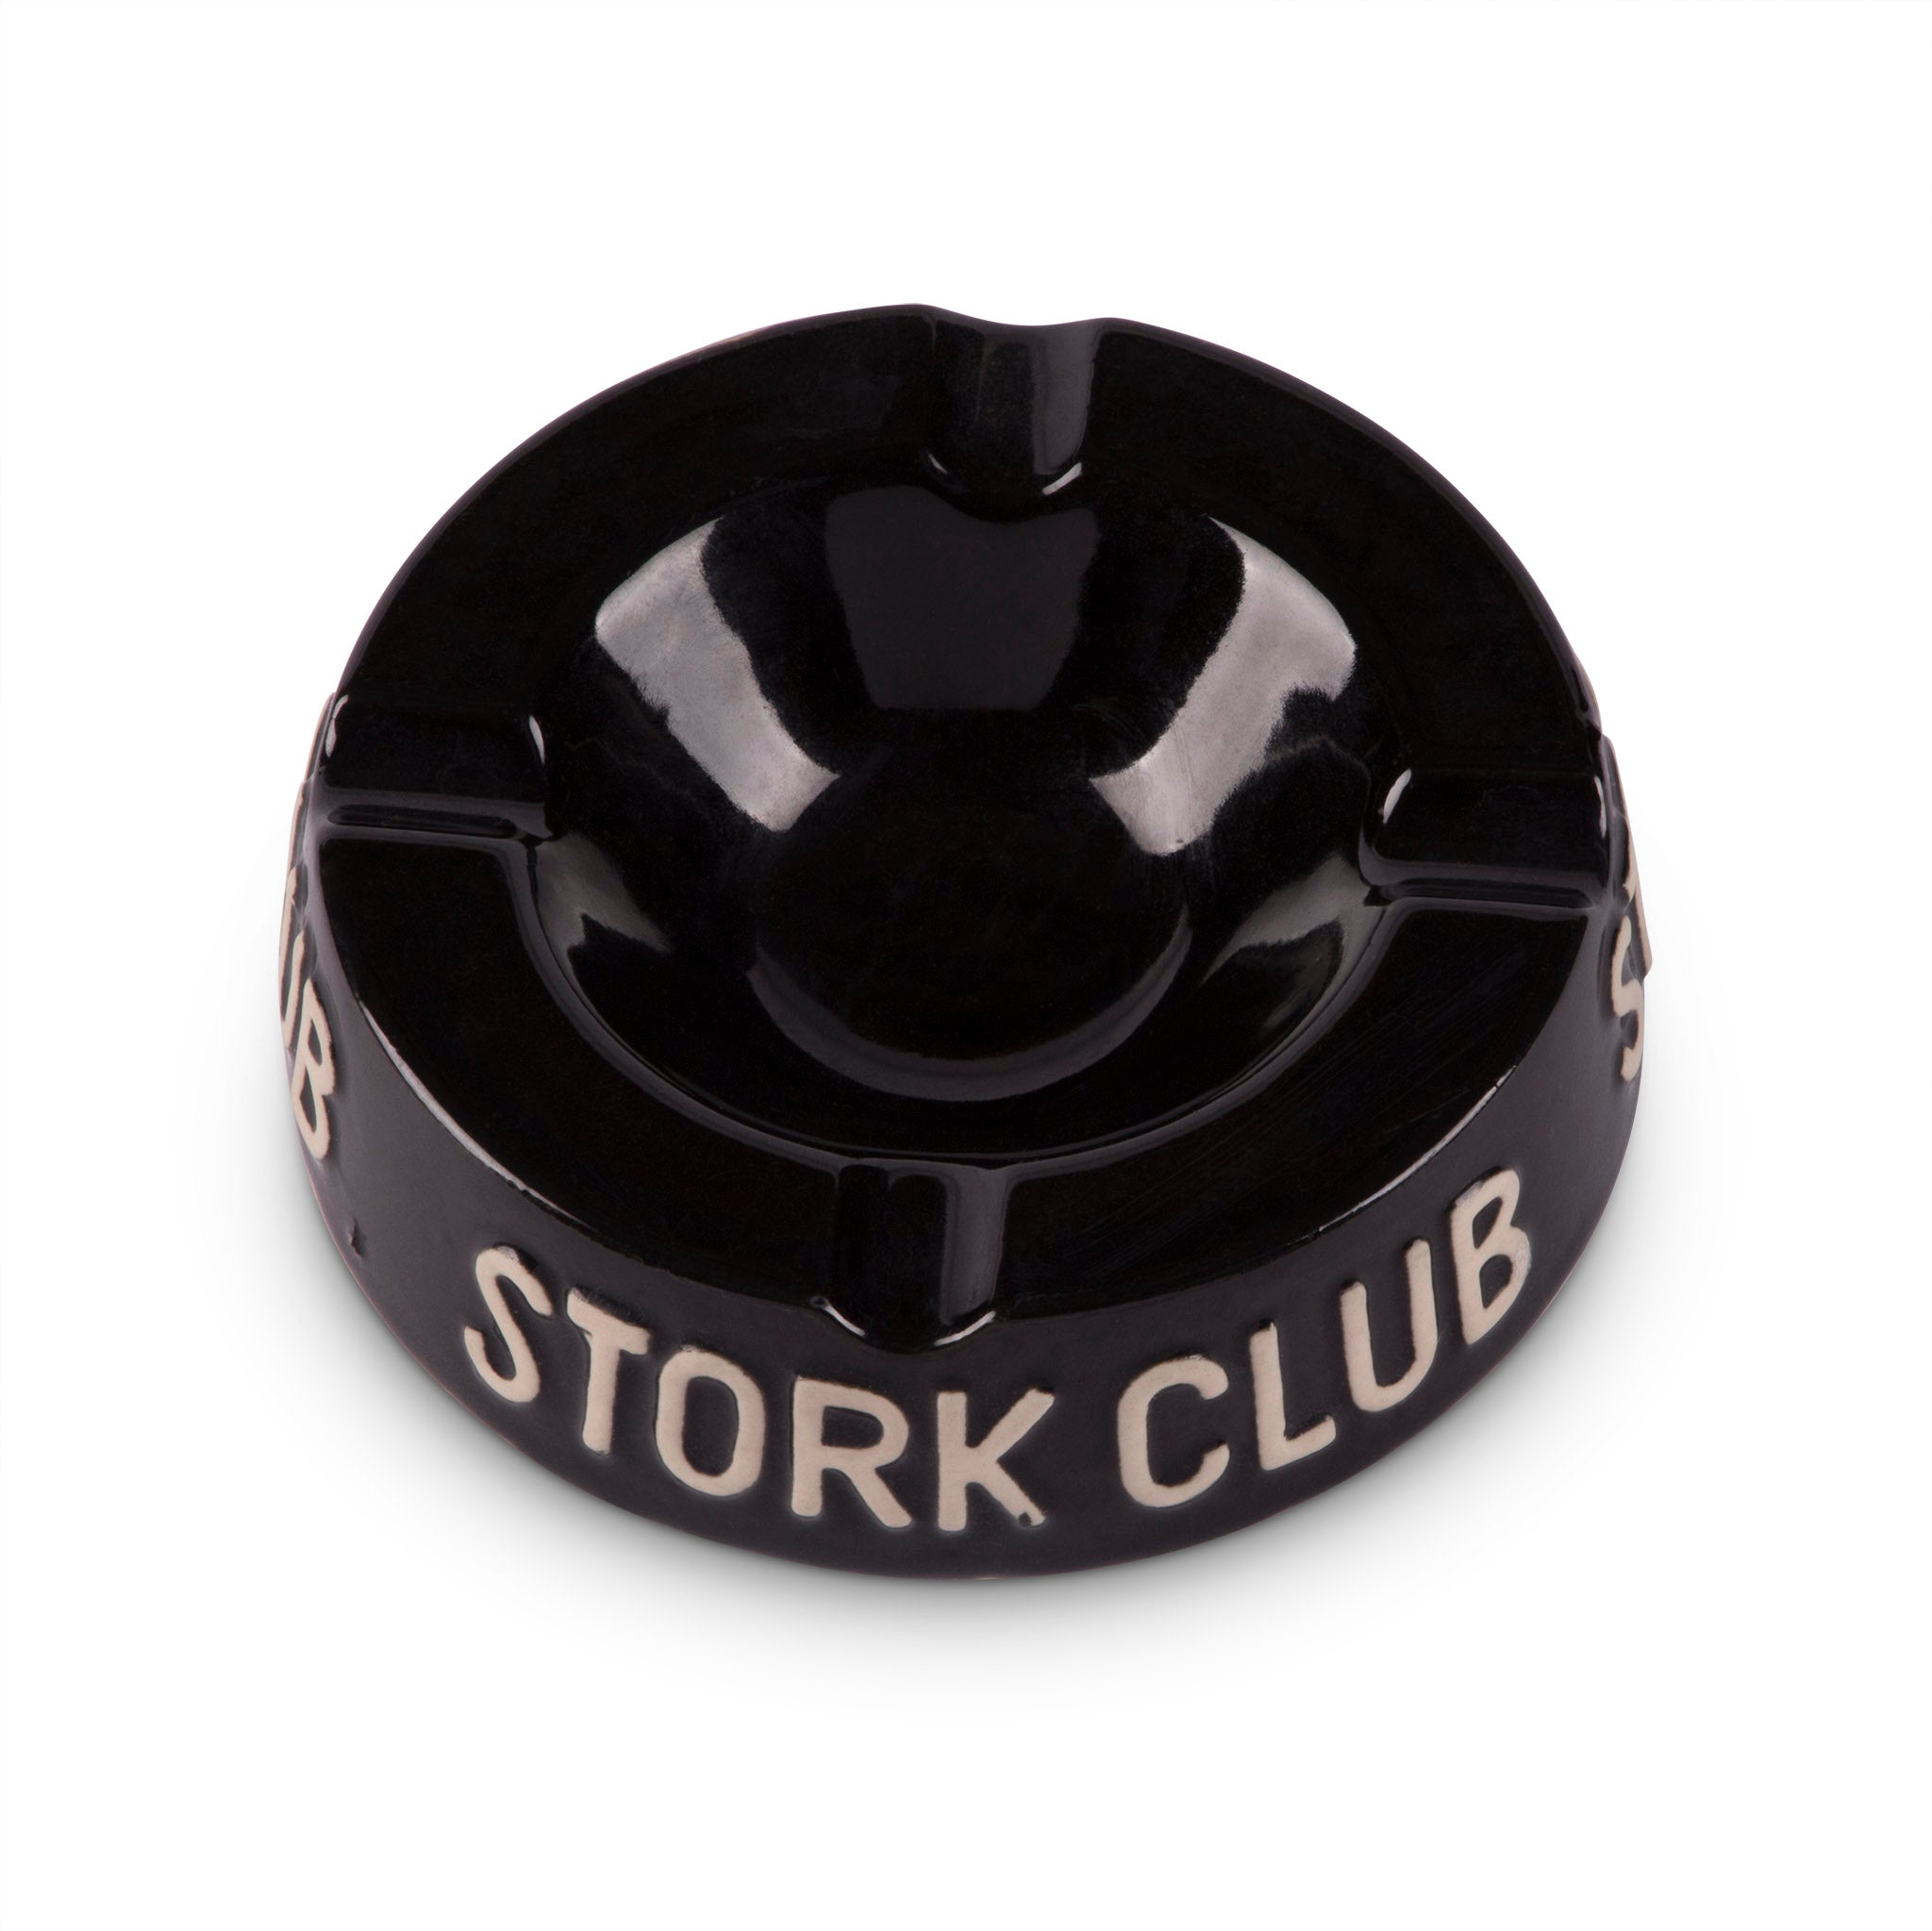 Stork Club Black Ceramic Cigar Ashtray